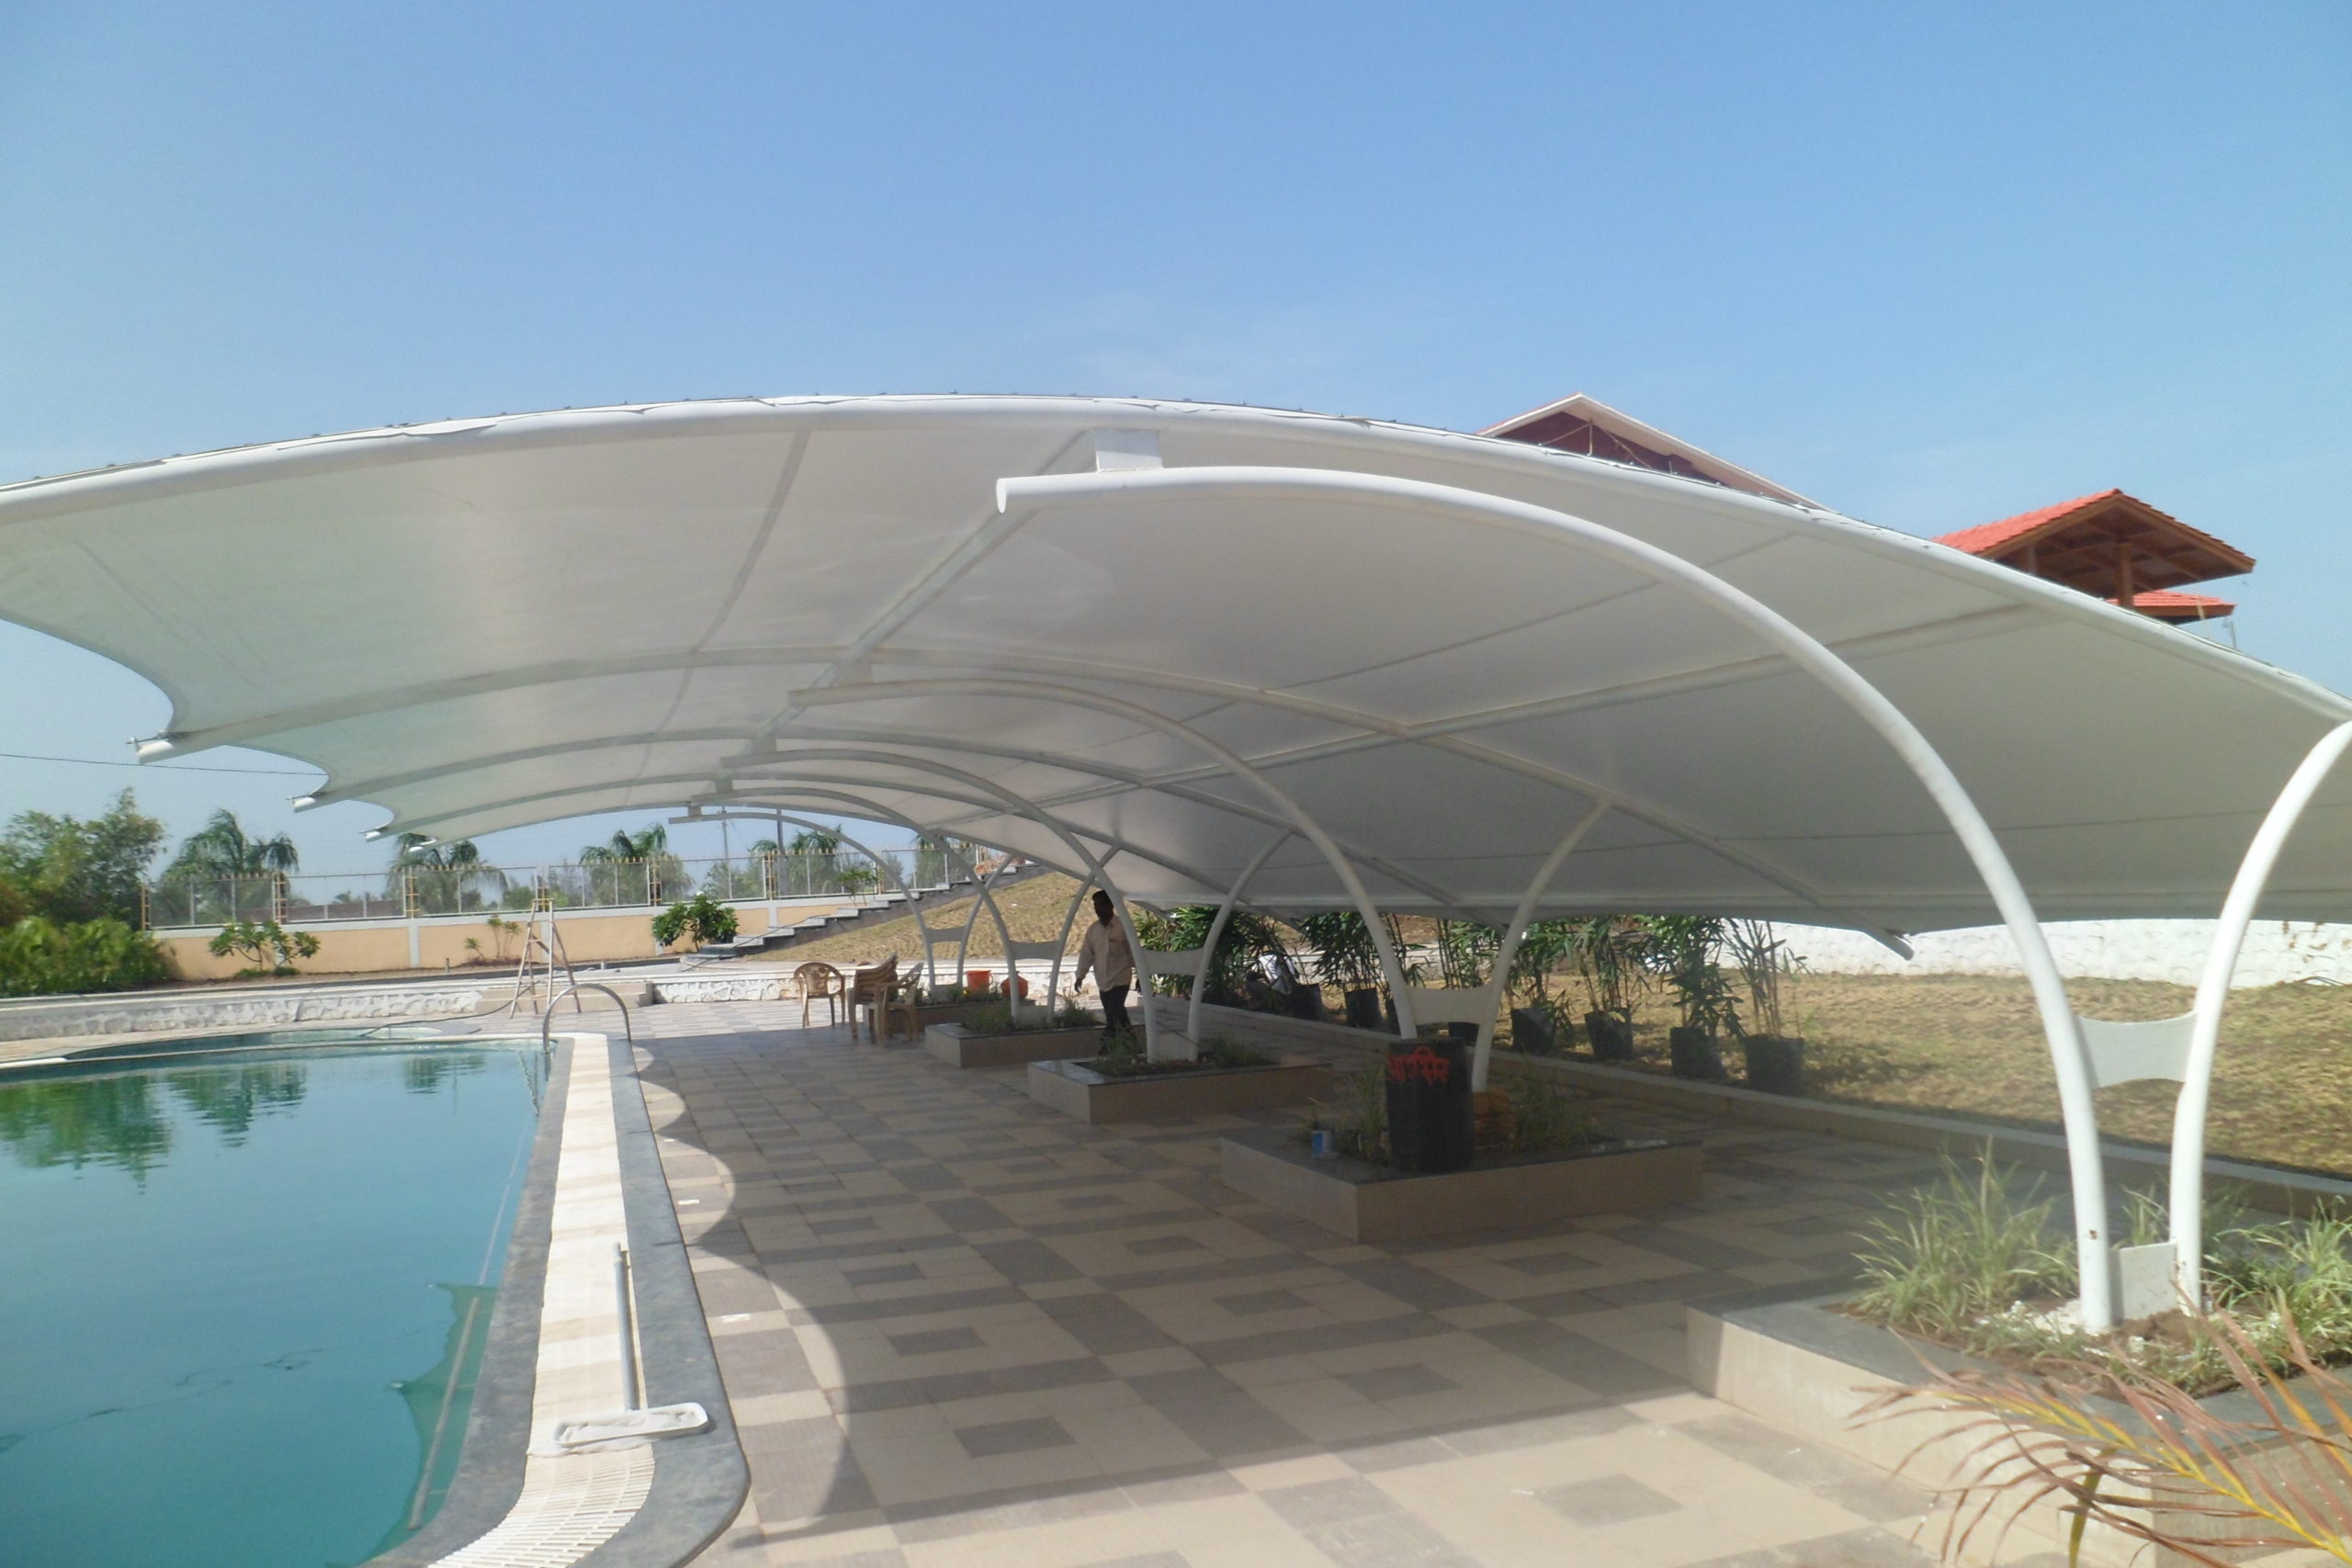 Swimming Pool Shade Manufacturers in dubai